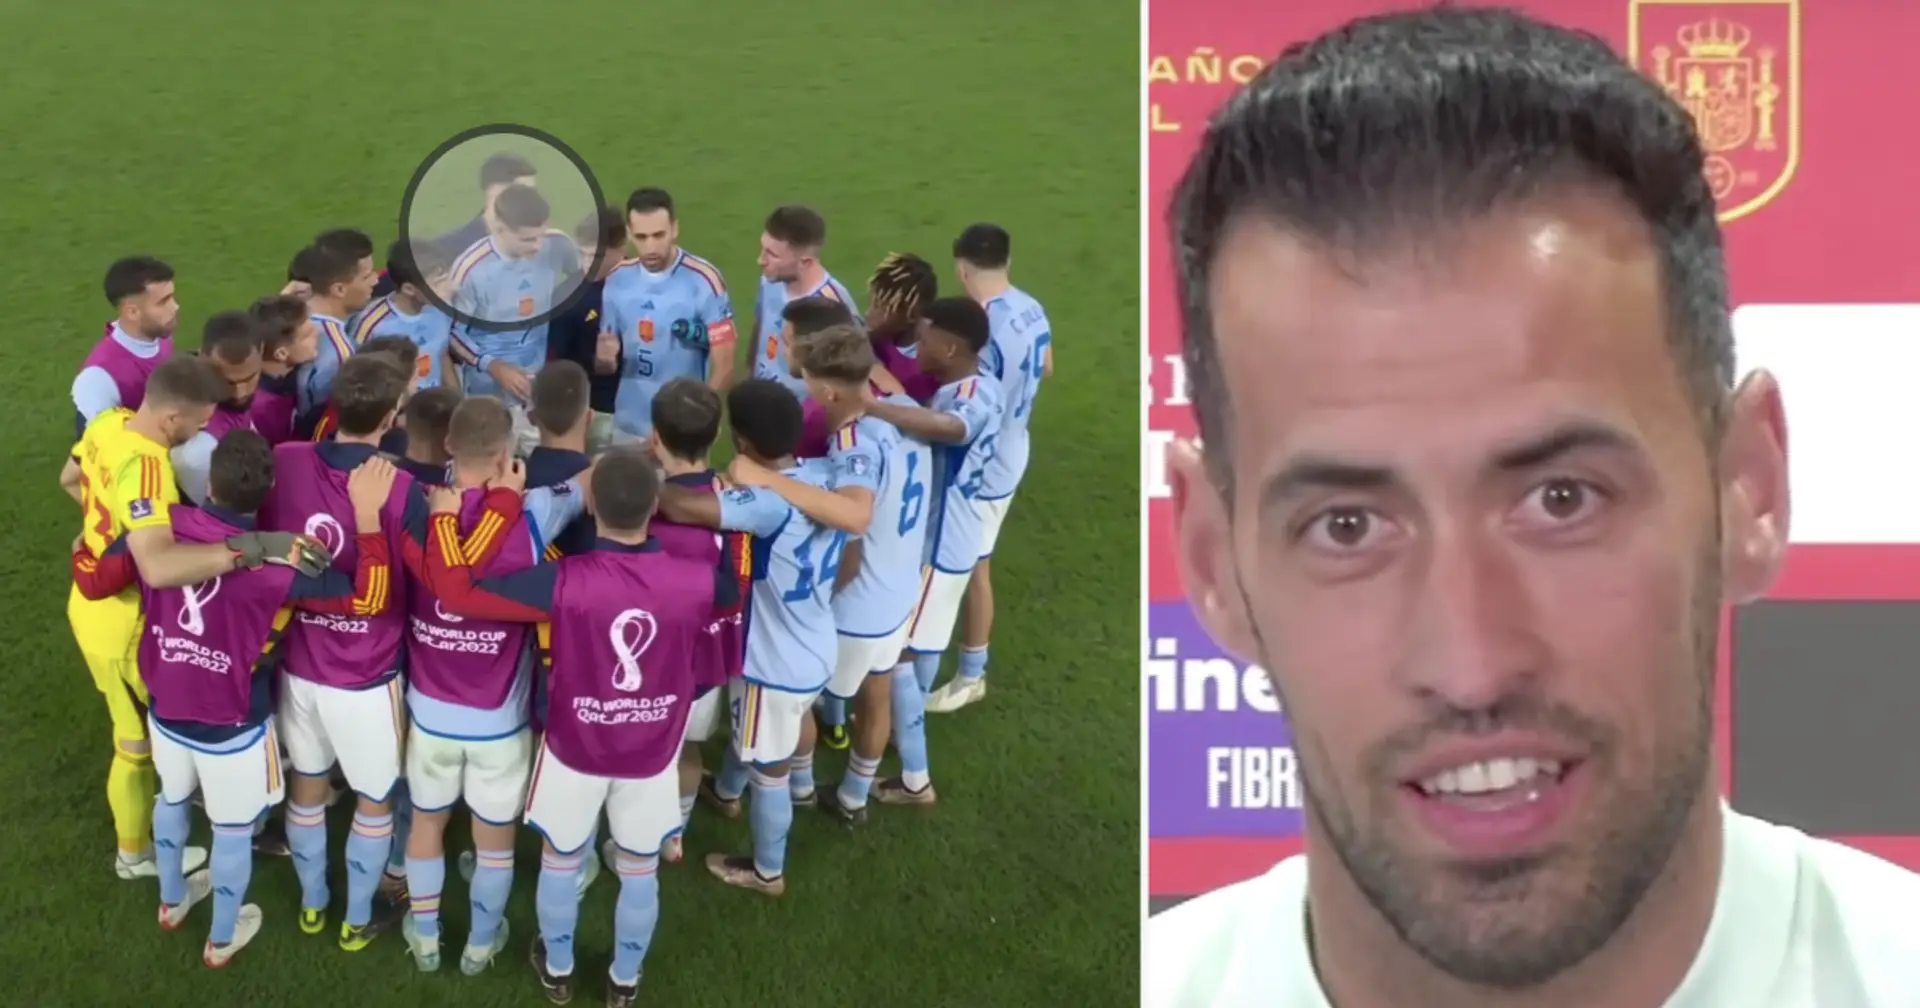 'The end of Spain': Luis de la Fuente names new national team captain, frustrated fans react